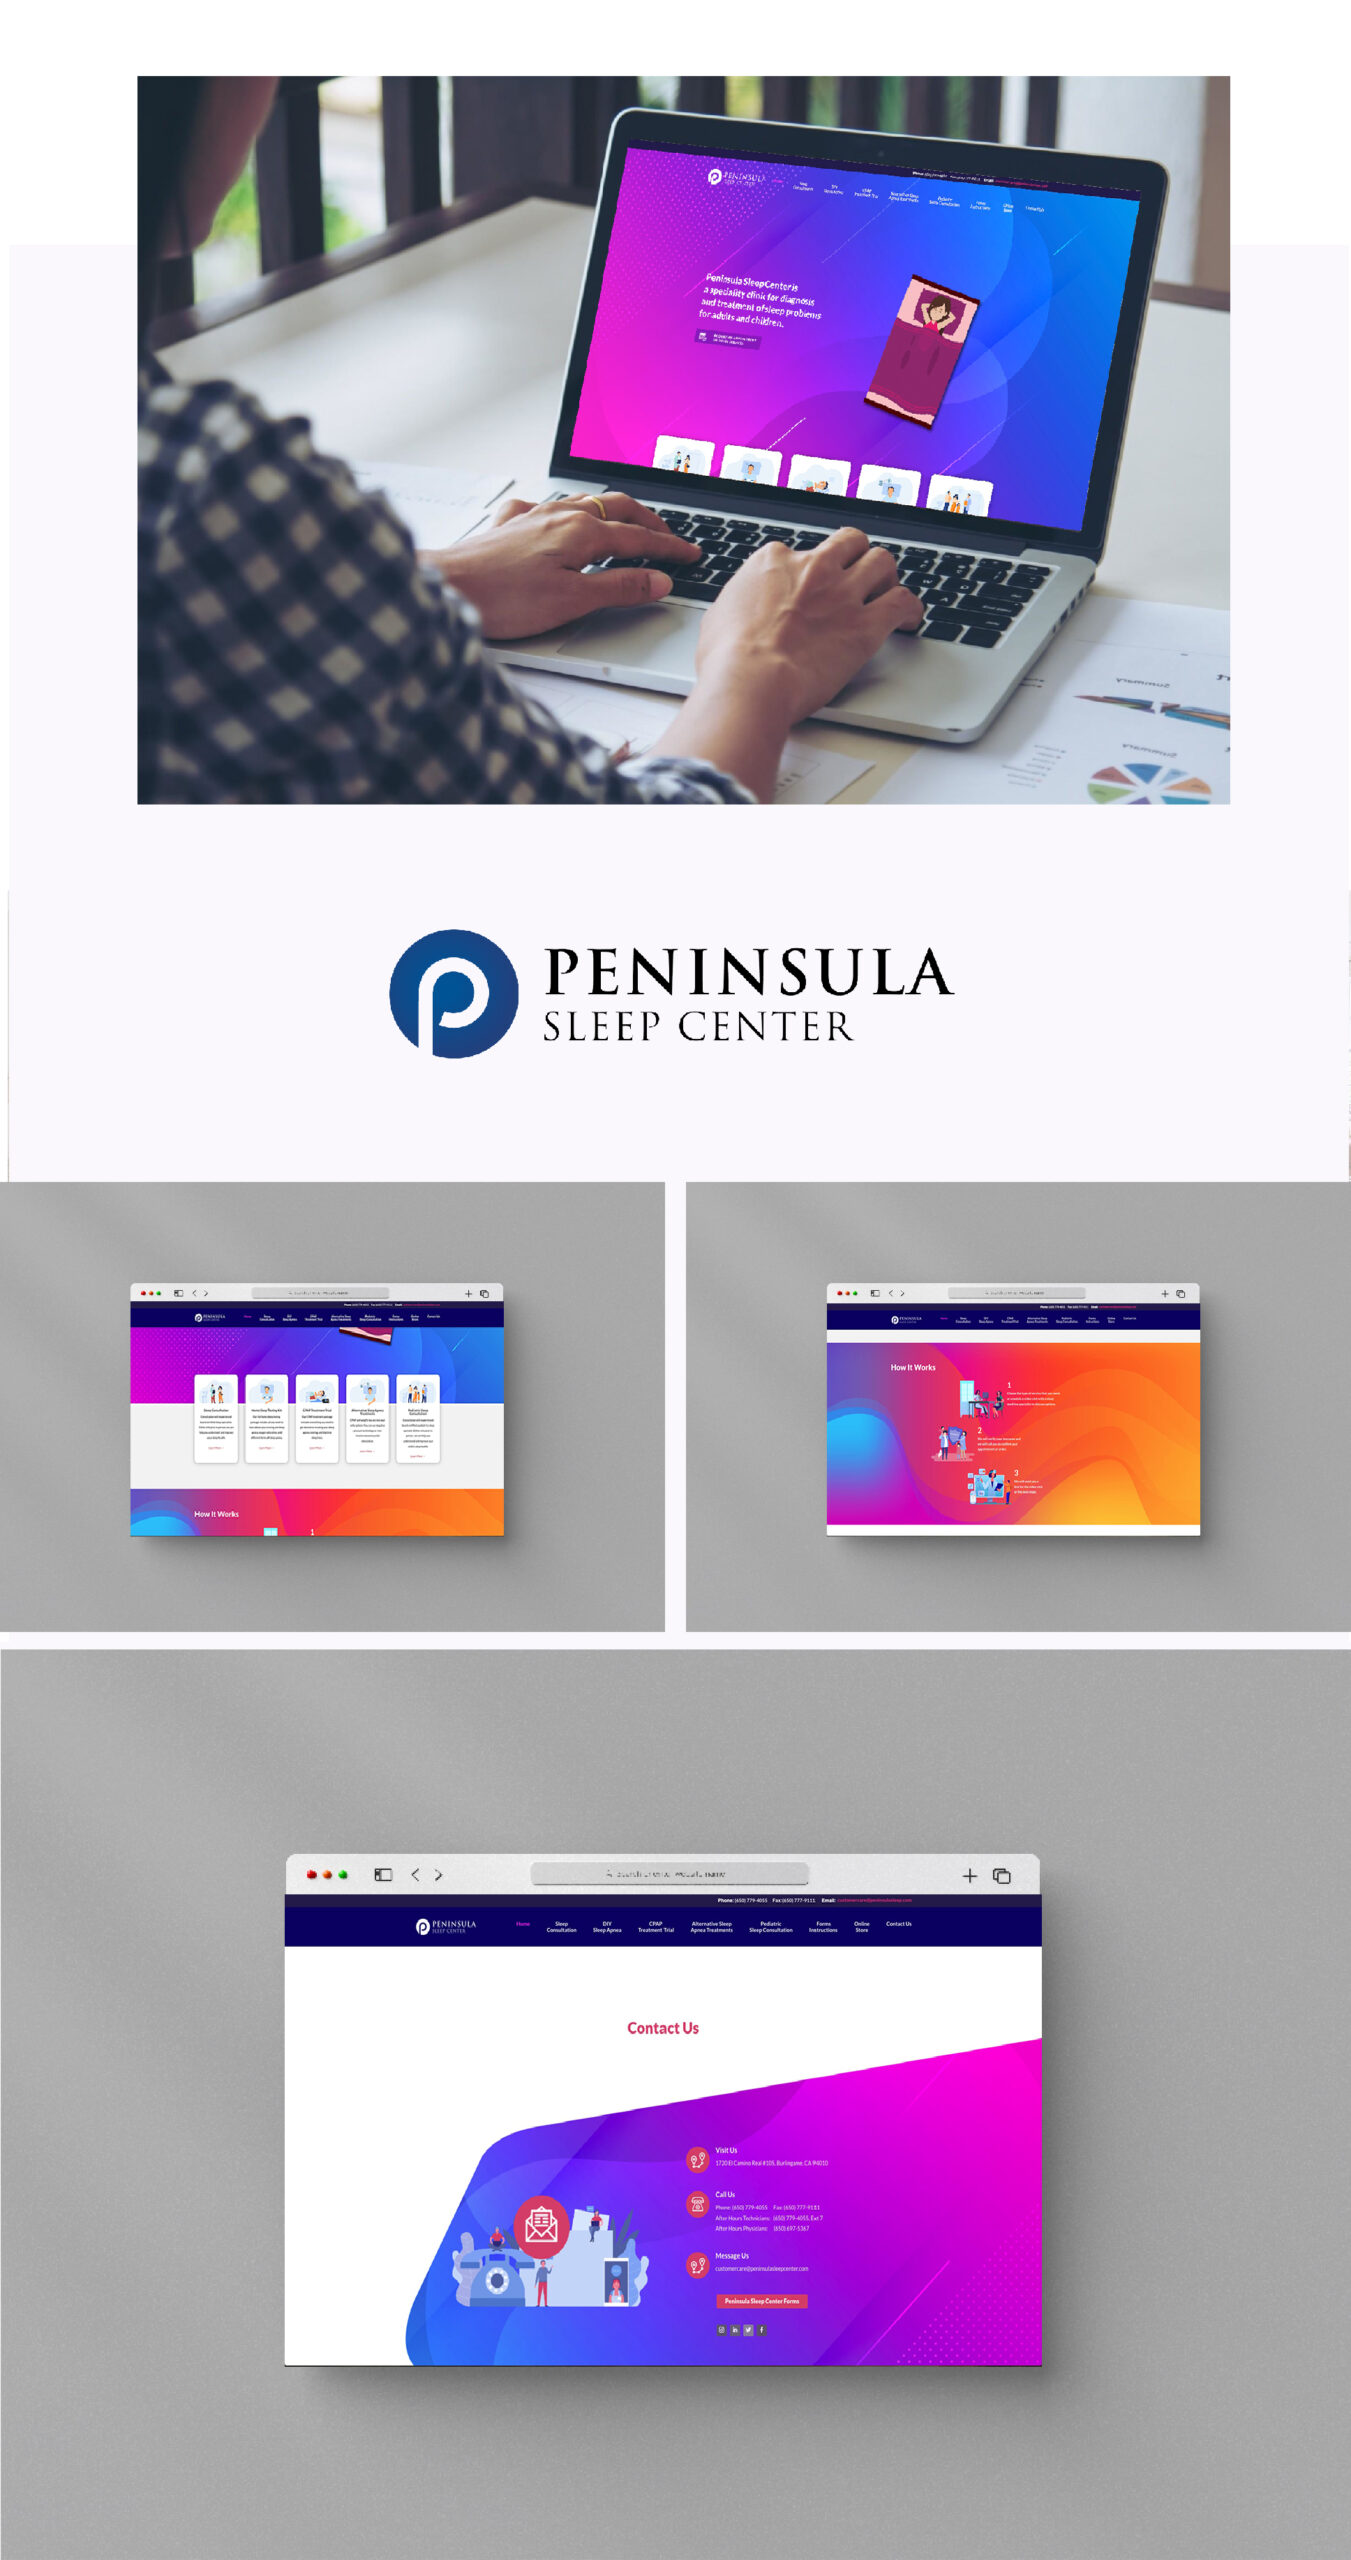 Peninsula Sleep Center, Inc.